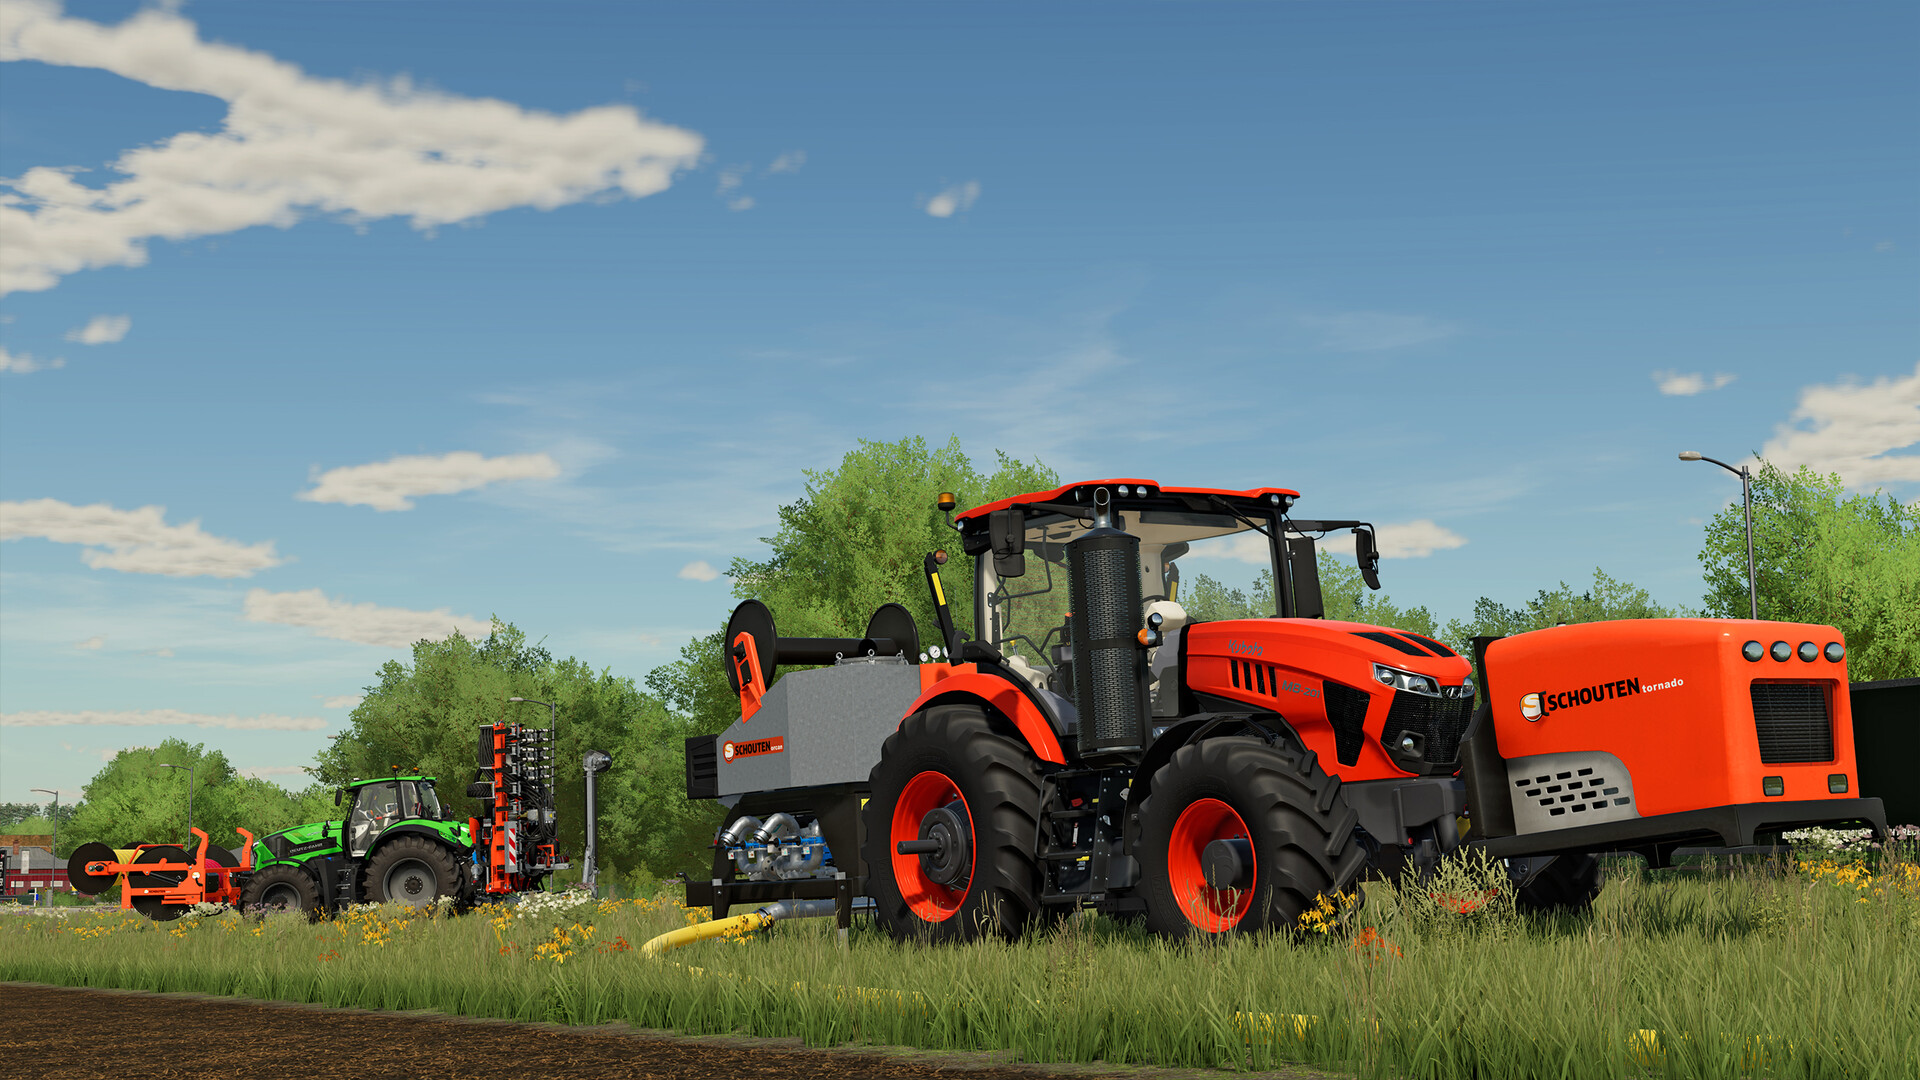 Farming Simulator 22 - Pumps n' Hoses Pack - GIANTS